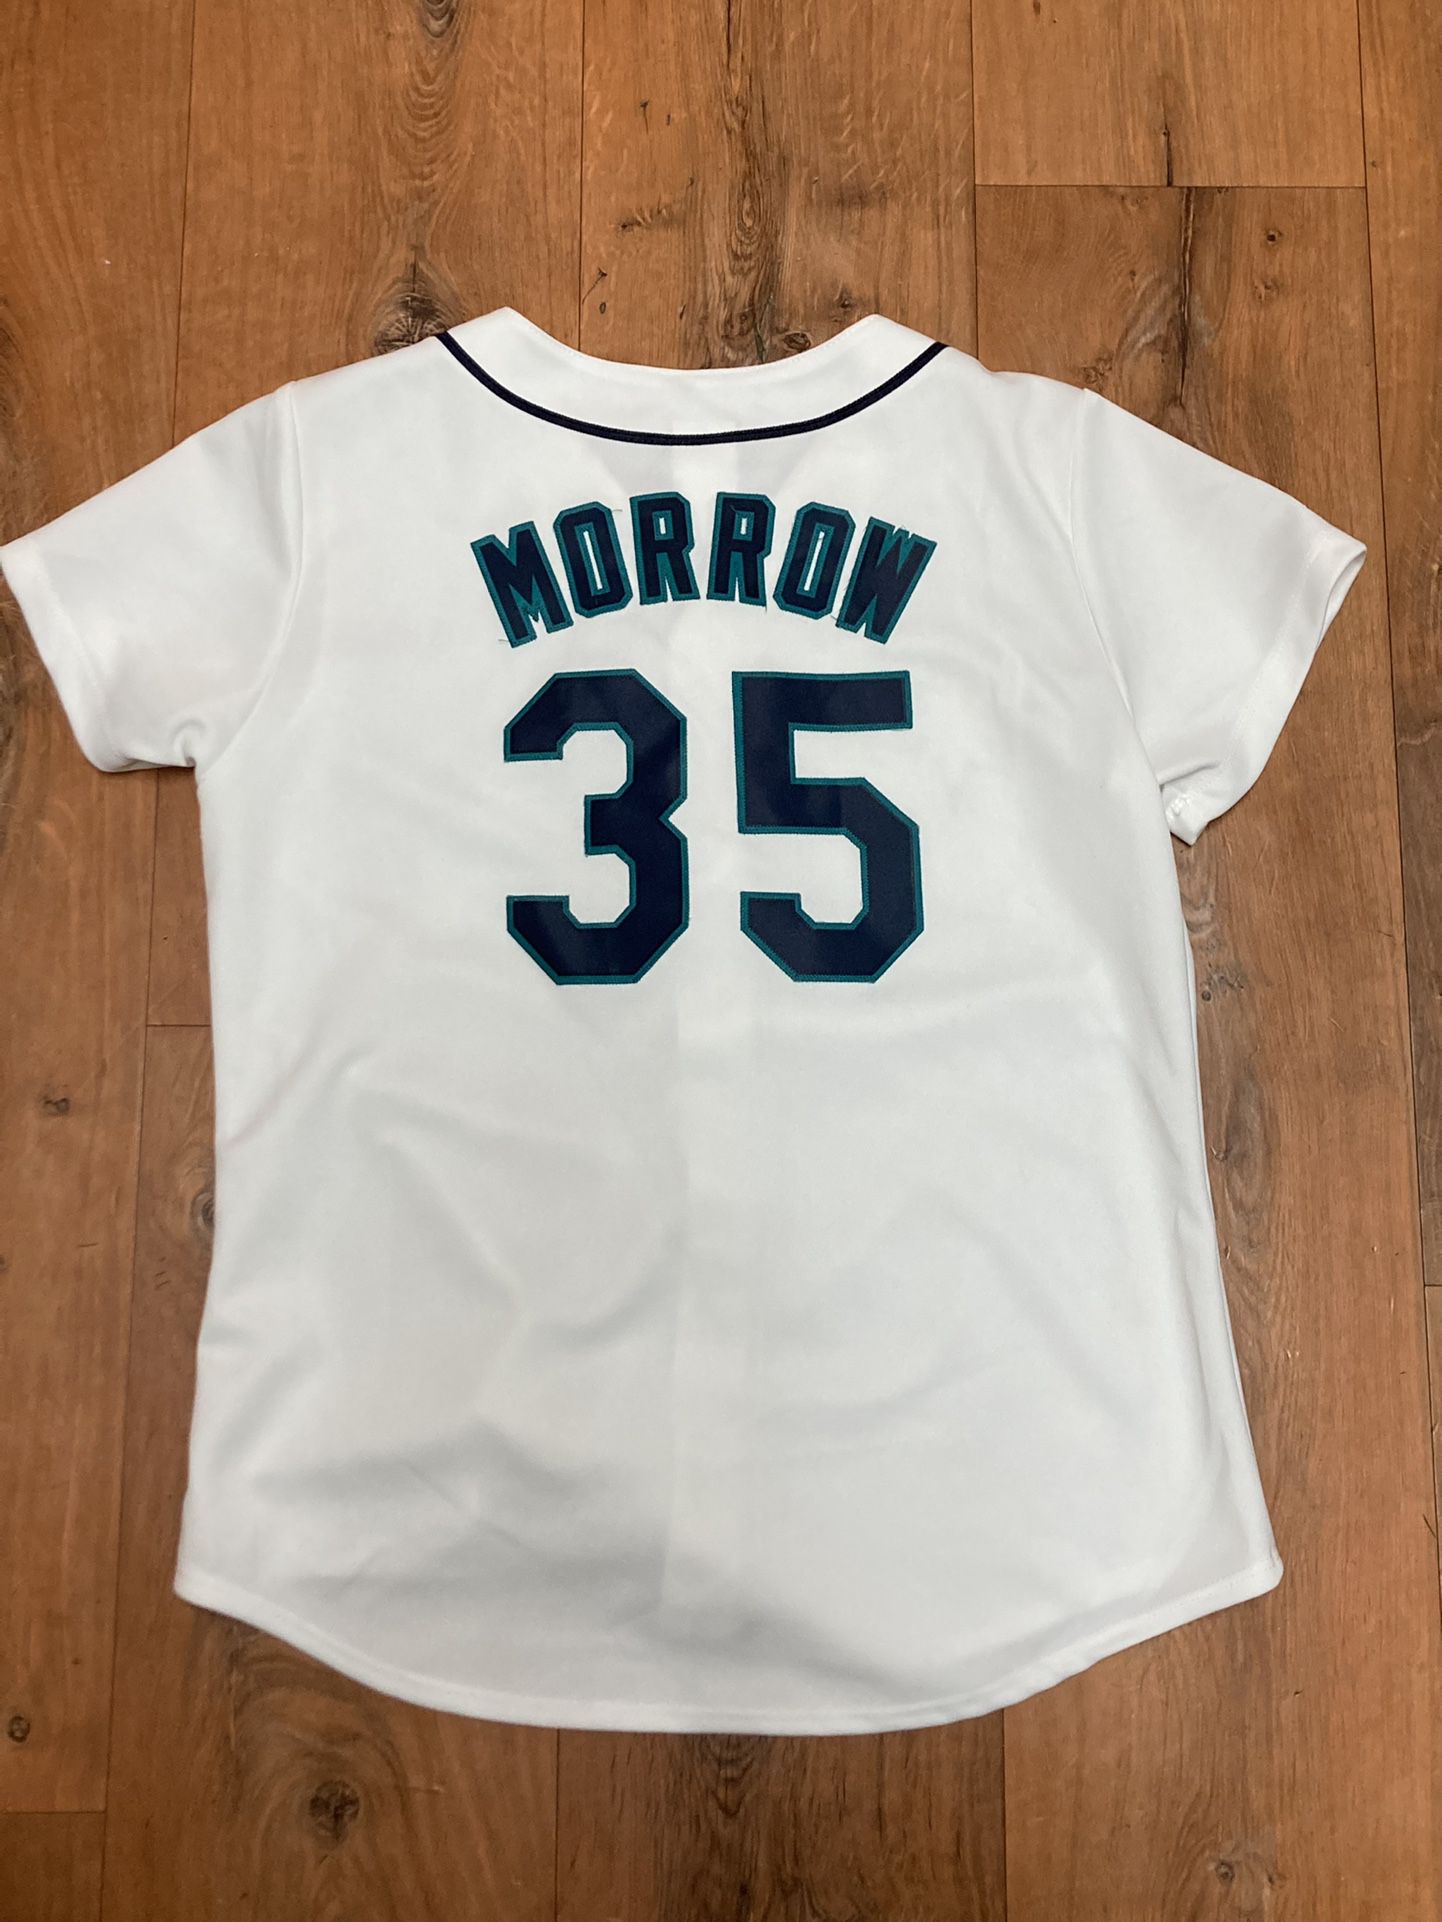 Majestic Seattle Mariners Women's Medium Morrow #35 MLB Jersey